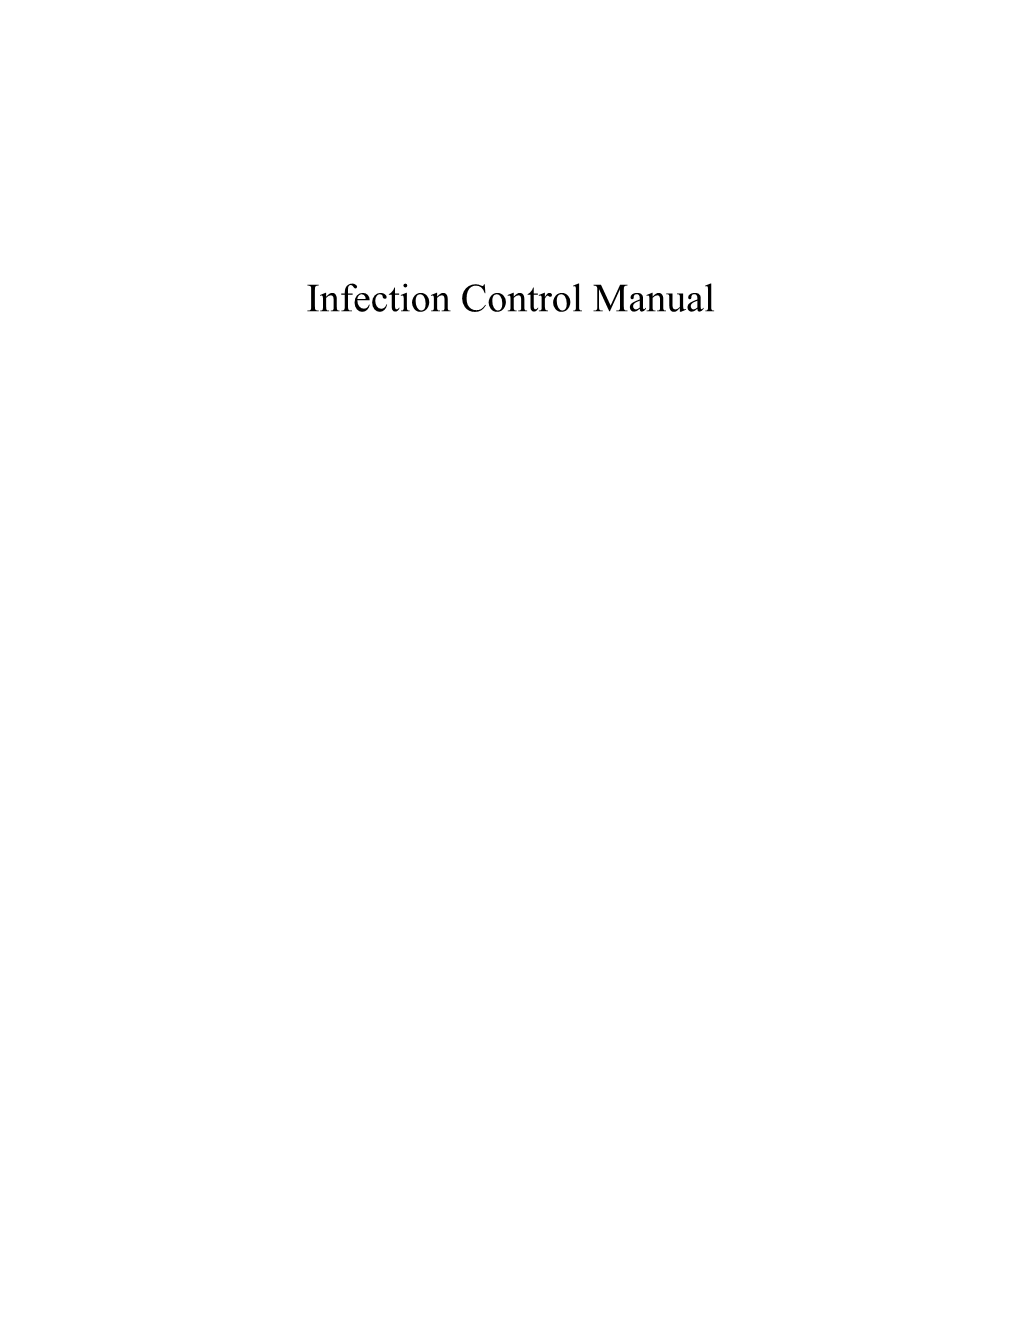 ECU School of Dental Medicine Infection Control Manual